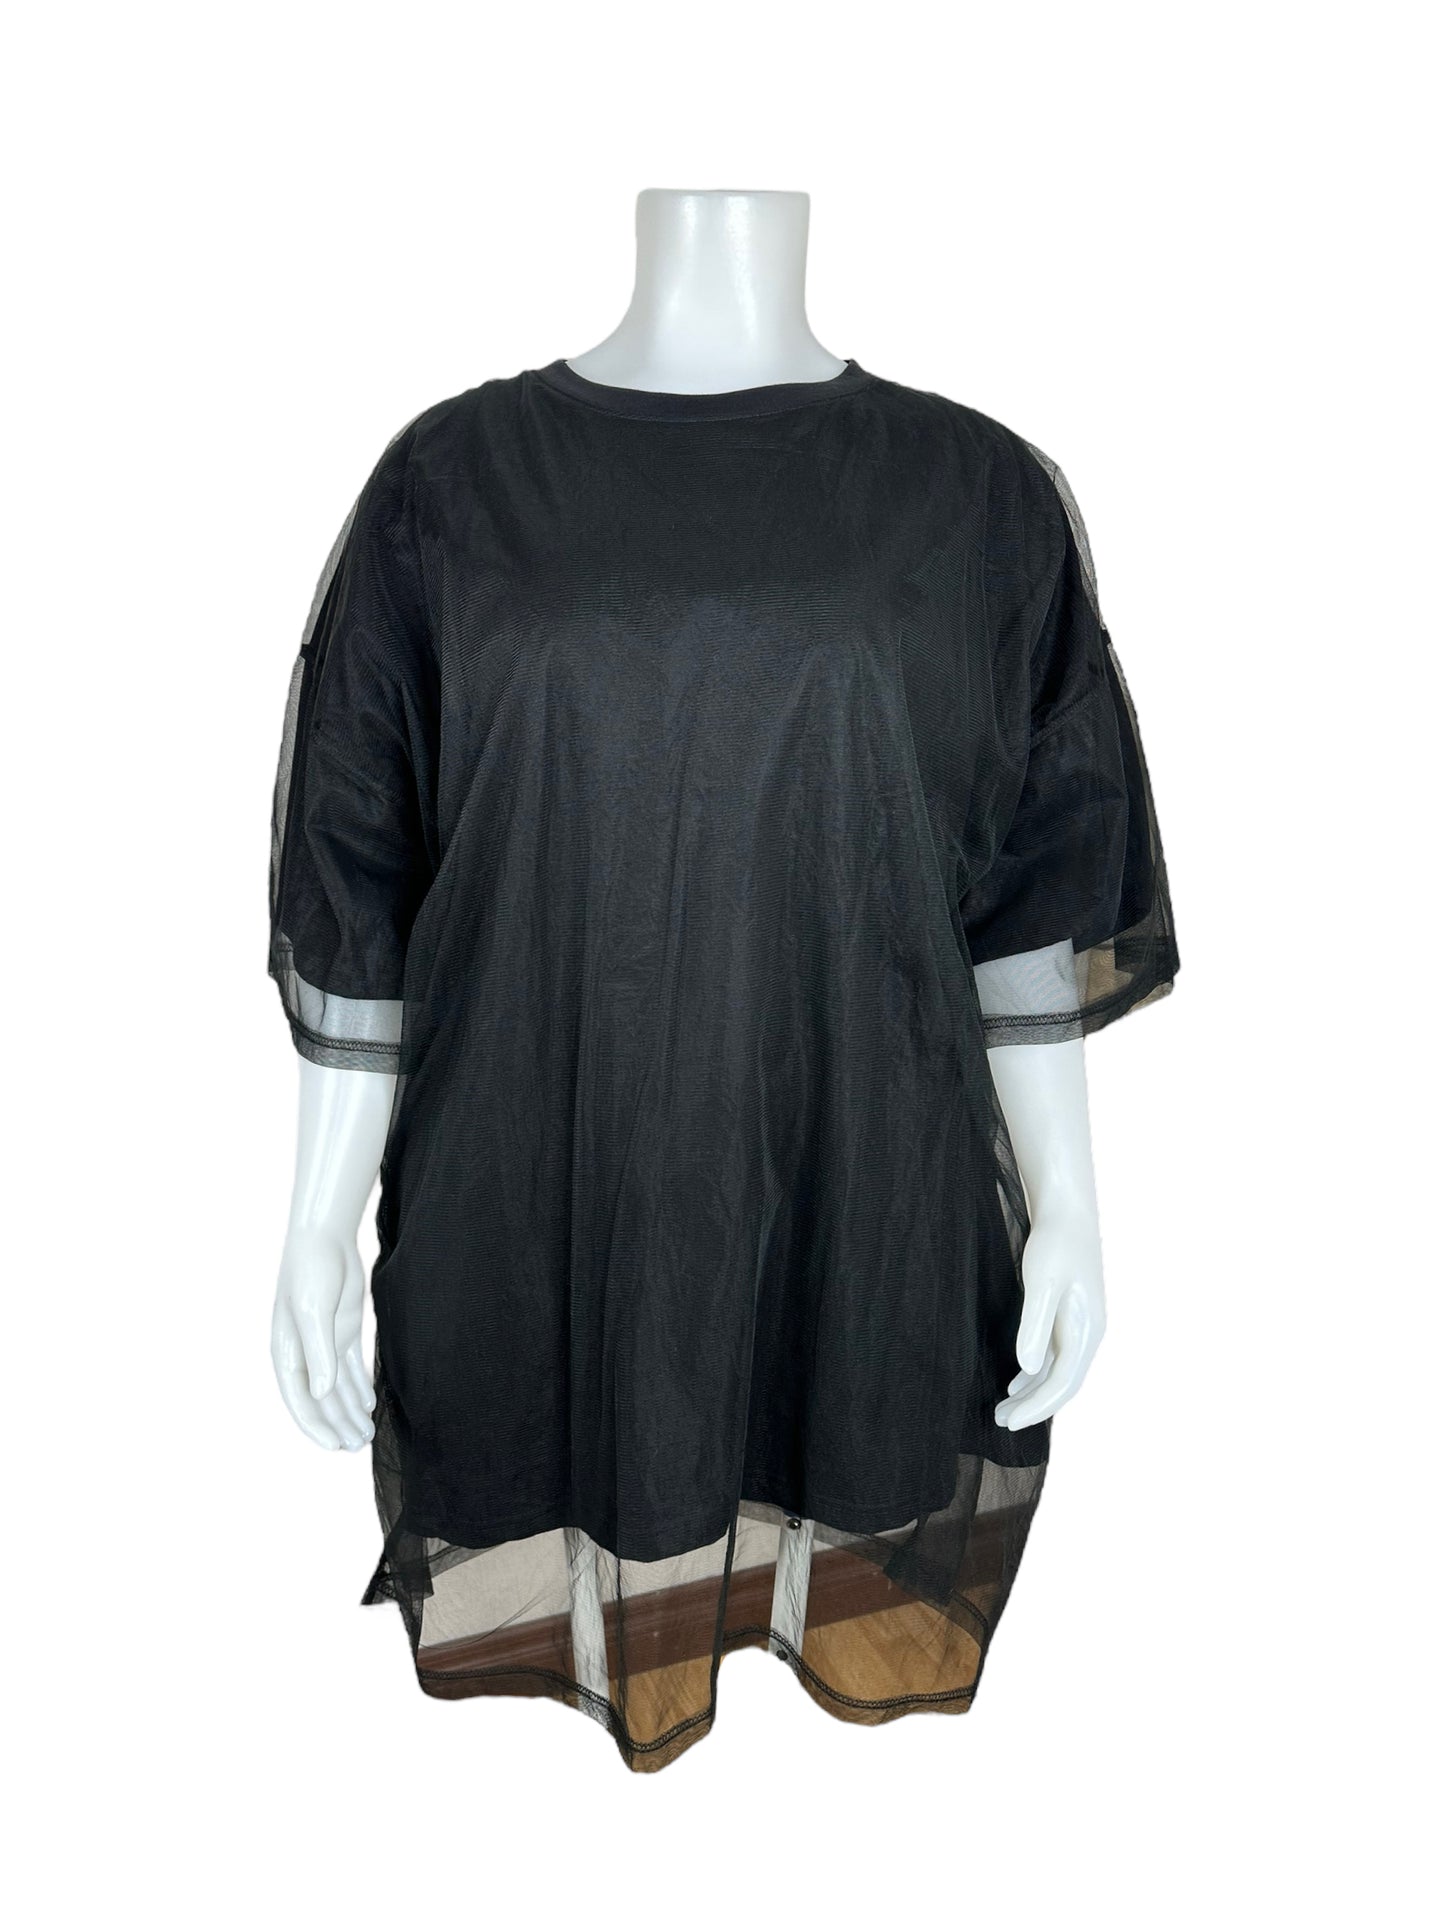 Oversized Black T-Shirt w/ Sheer Layer